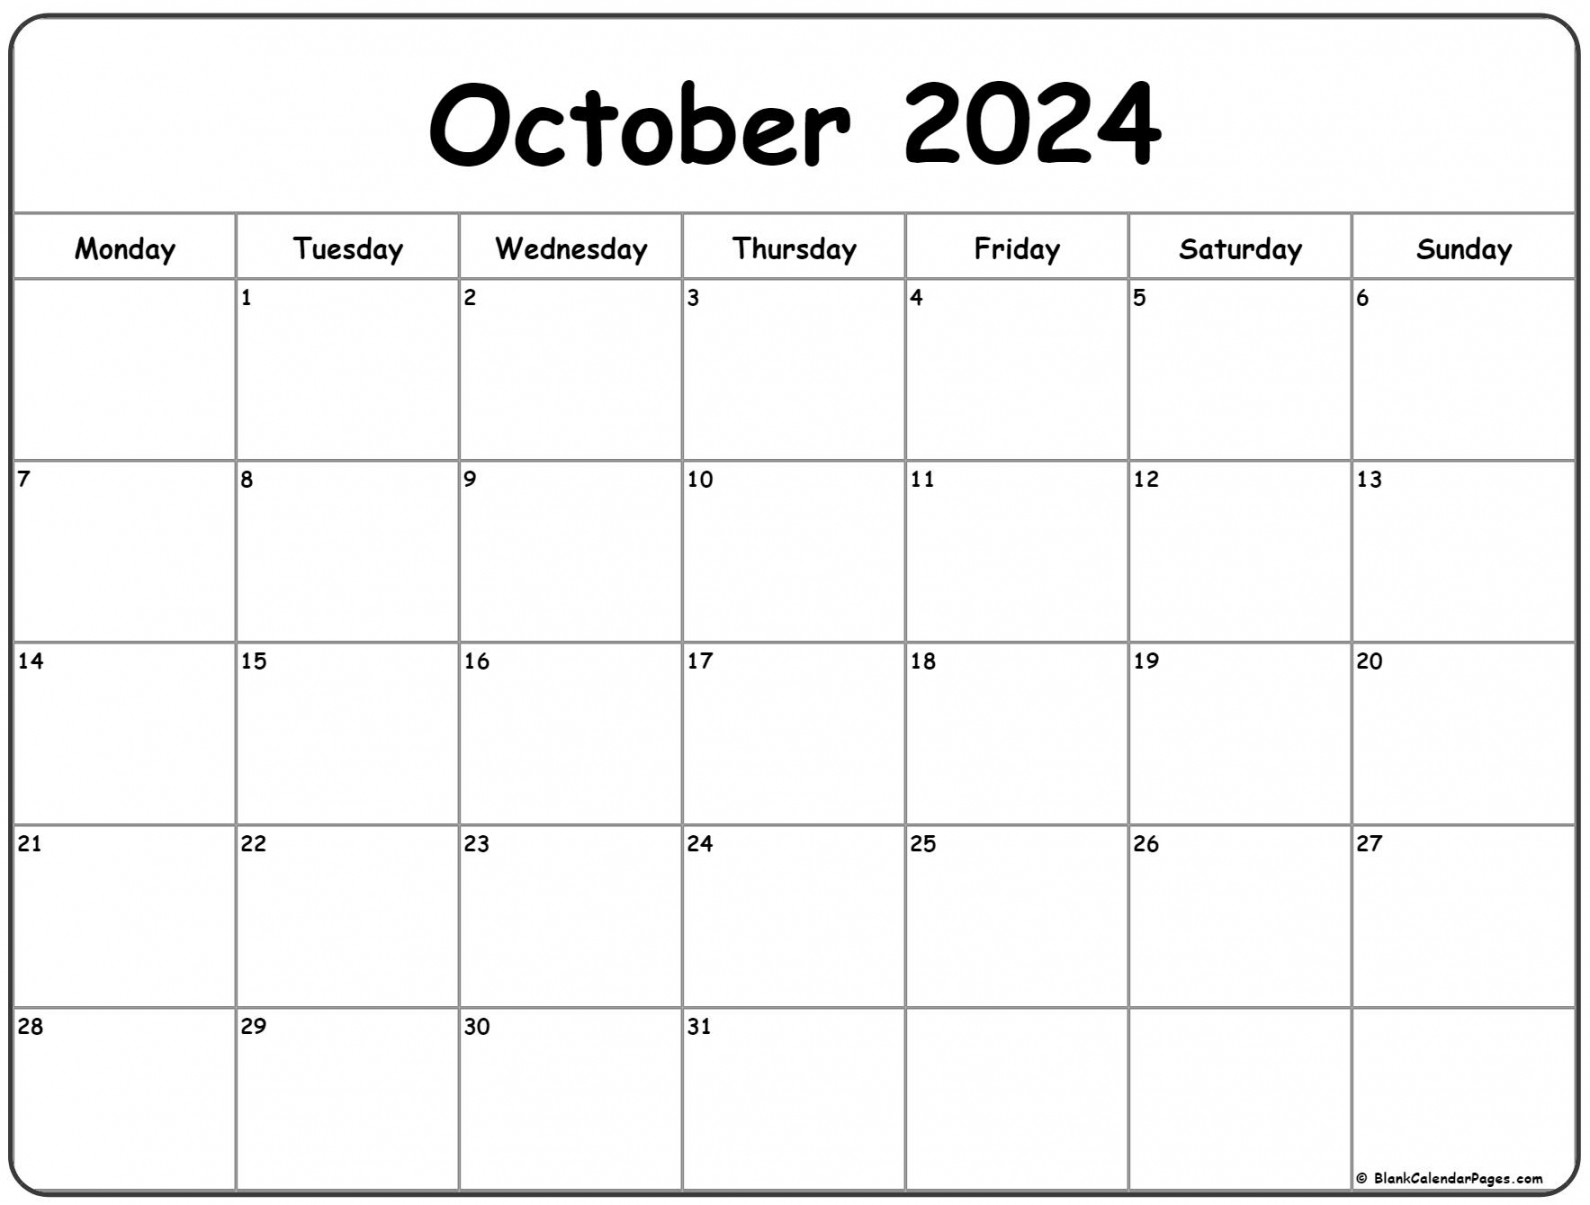 October Monday Calendar Monday to Sunday